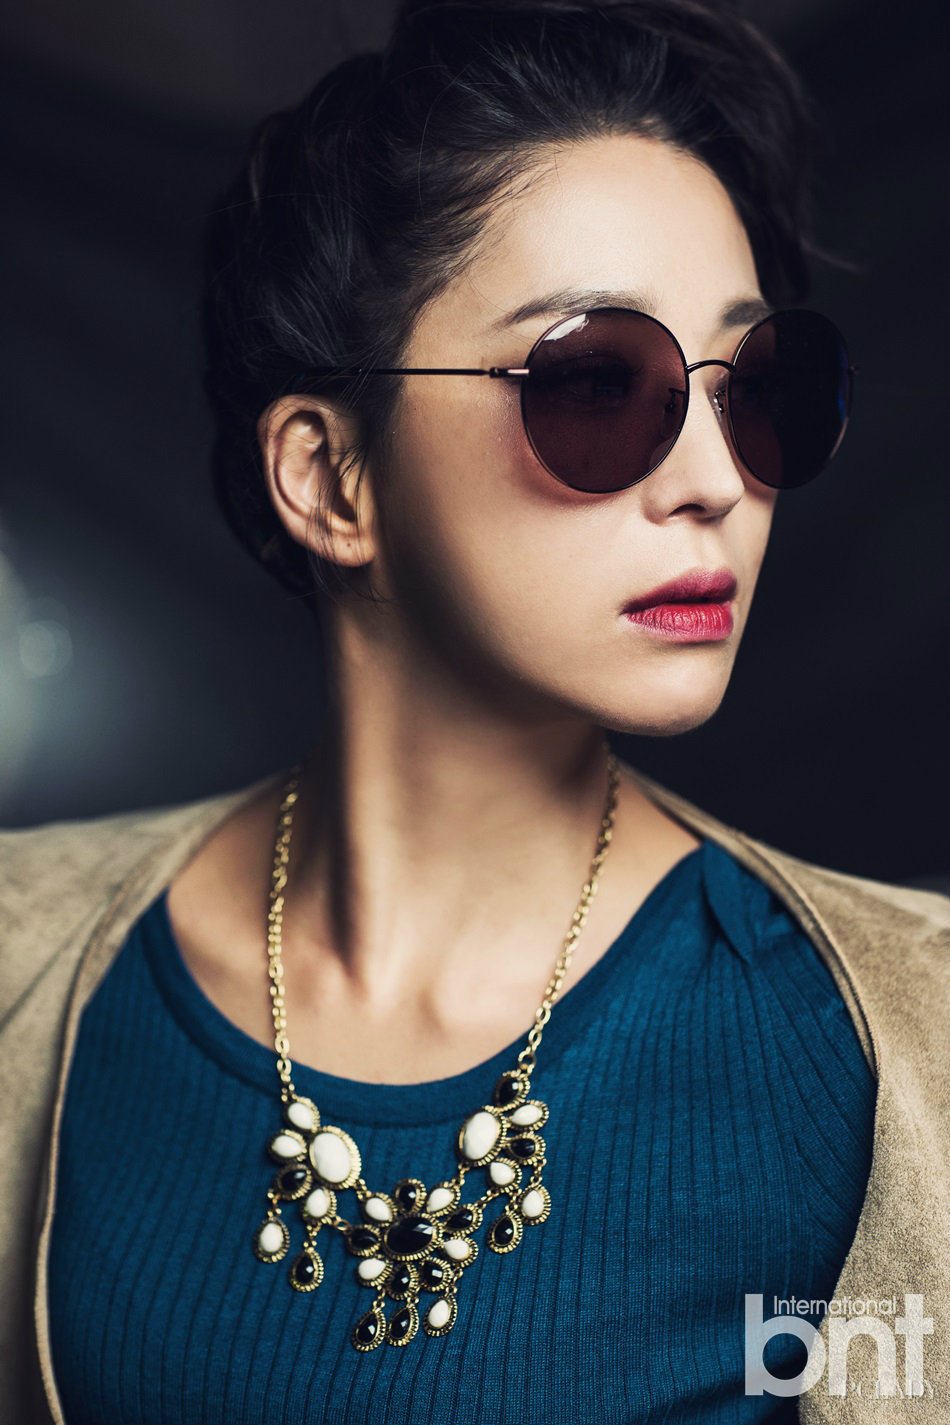 Go Eun Han Sexy and Hottest Photos , Latest Pics